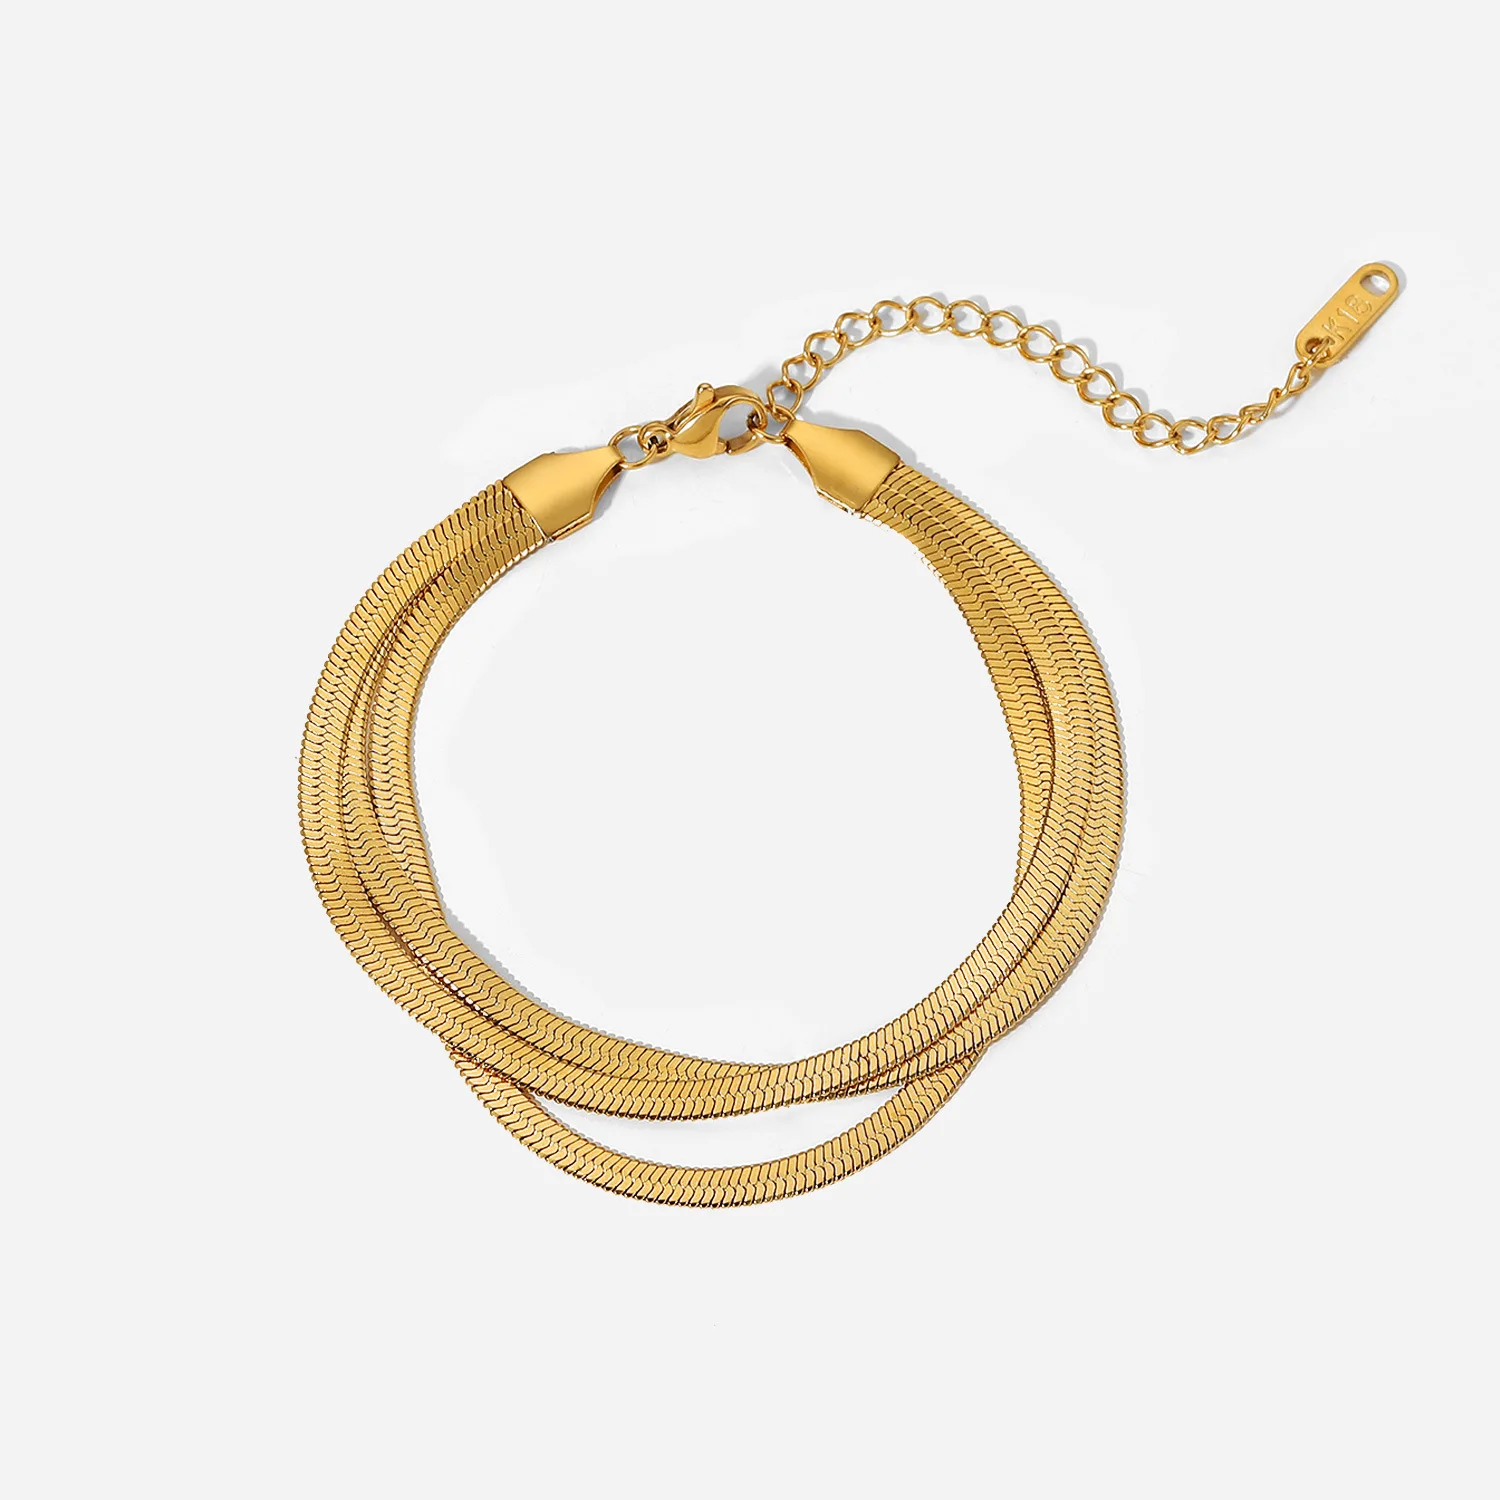 

Three Layered Herringbone Chain Bracelet Wrist Jewelry 18K Gold Plated Stainless Steel Flat Snake Chain Bracelets For Women